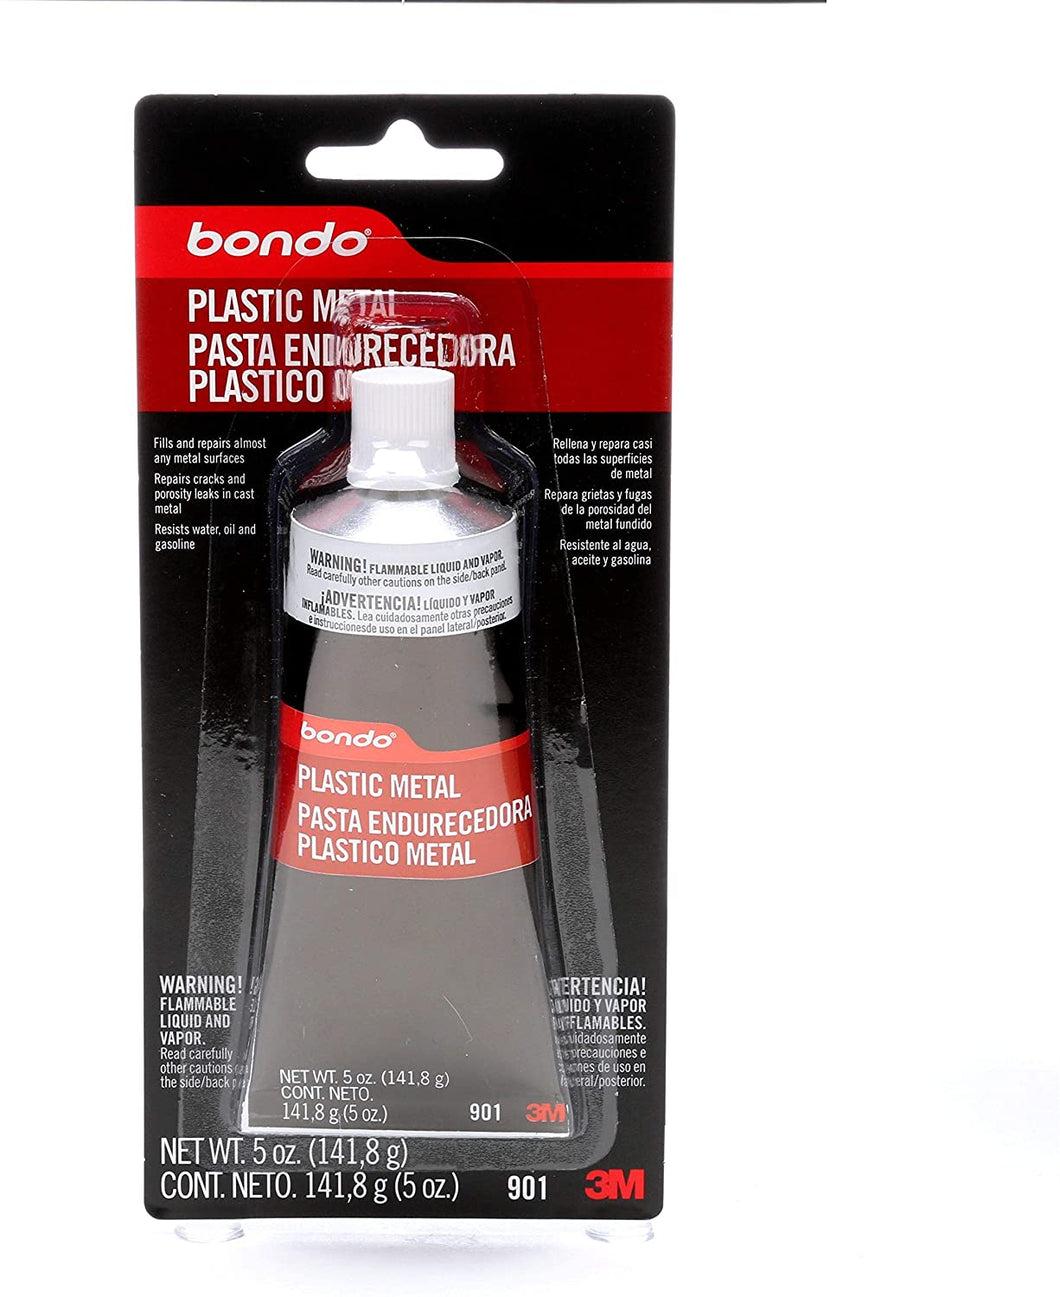 Bondo Plastic Metal, Seals & Fills Almost Any Metal Surface for Durability & Longevity, 5 oz